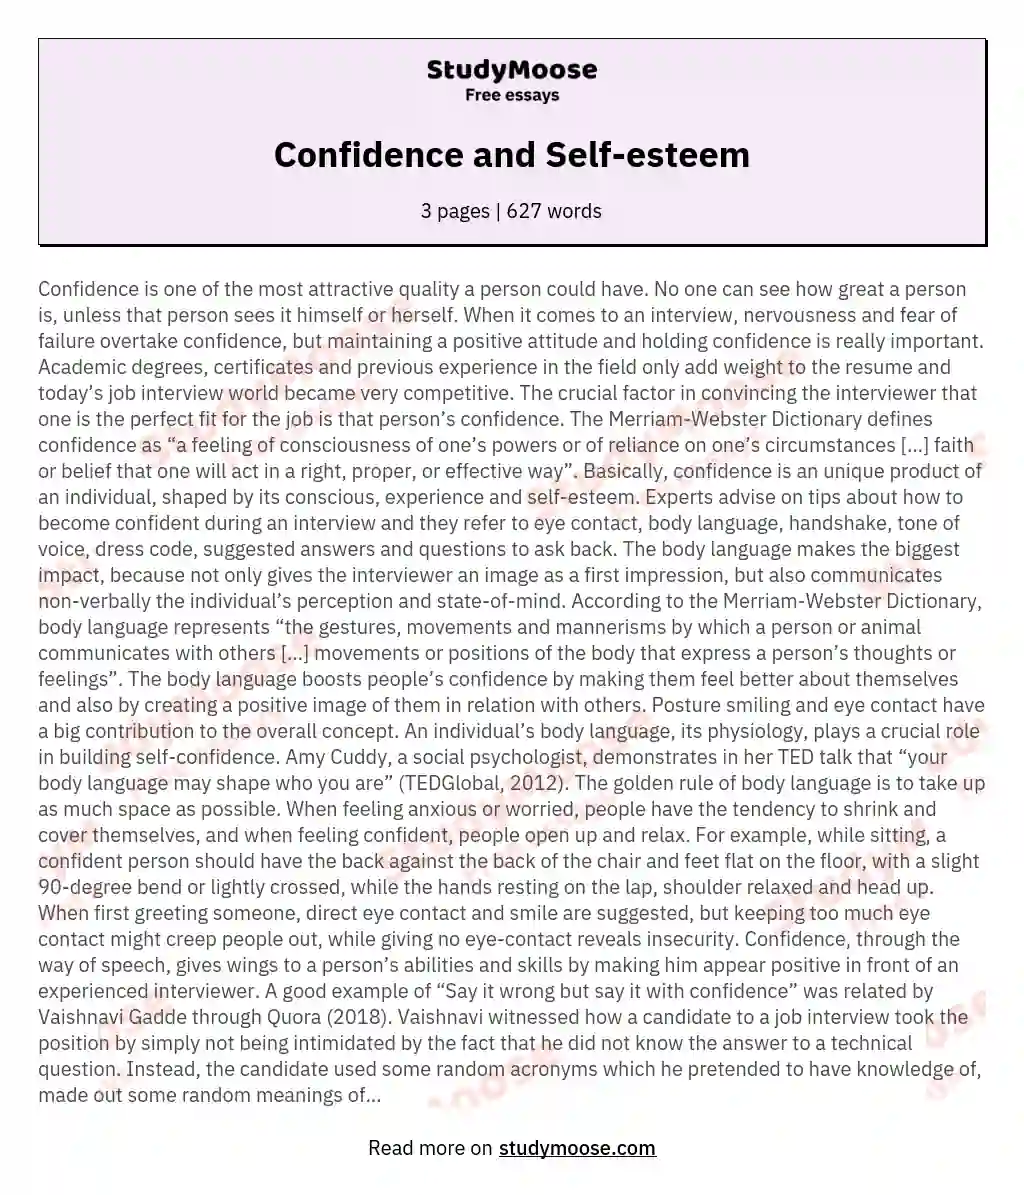 Confidence and Self-esteem essay